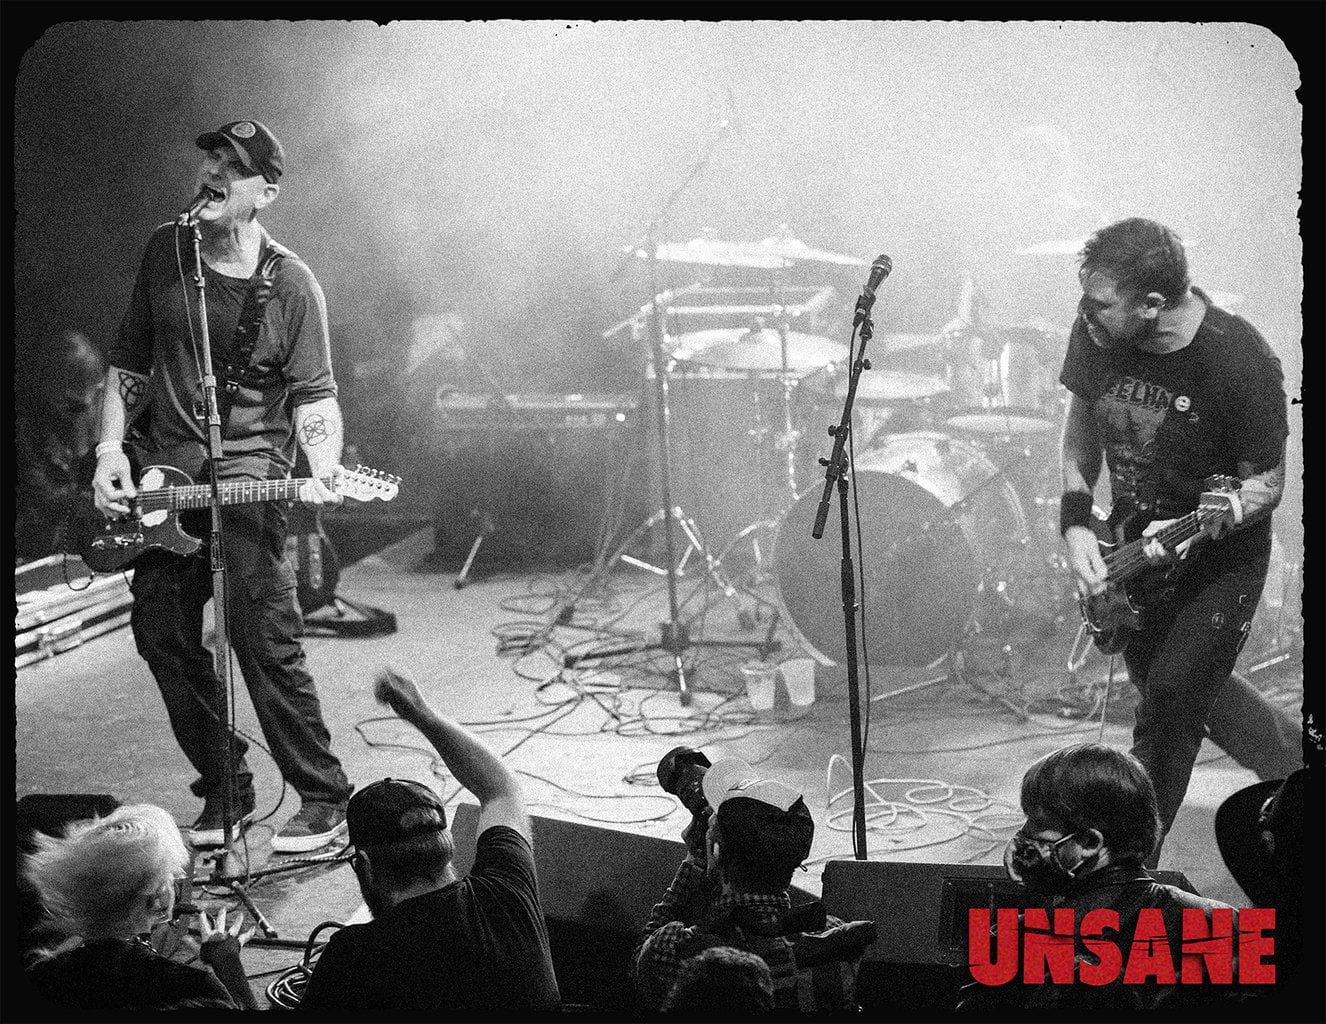 UNSANE - Unsane Europe and UK tour poster